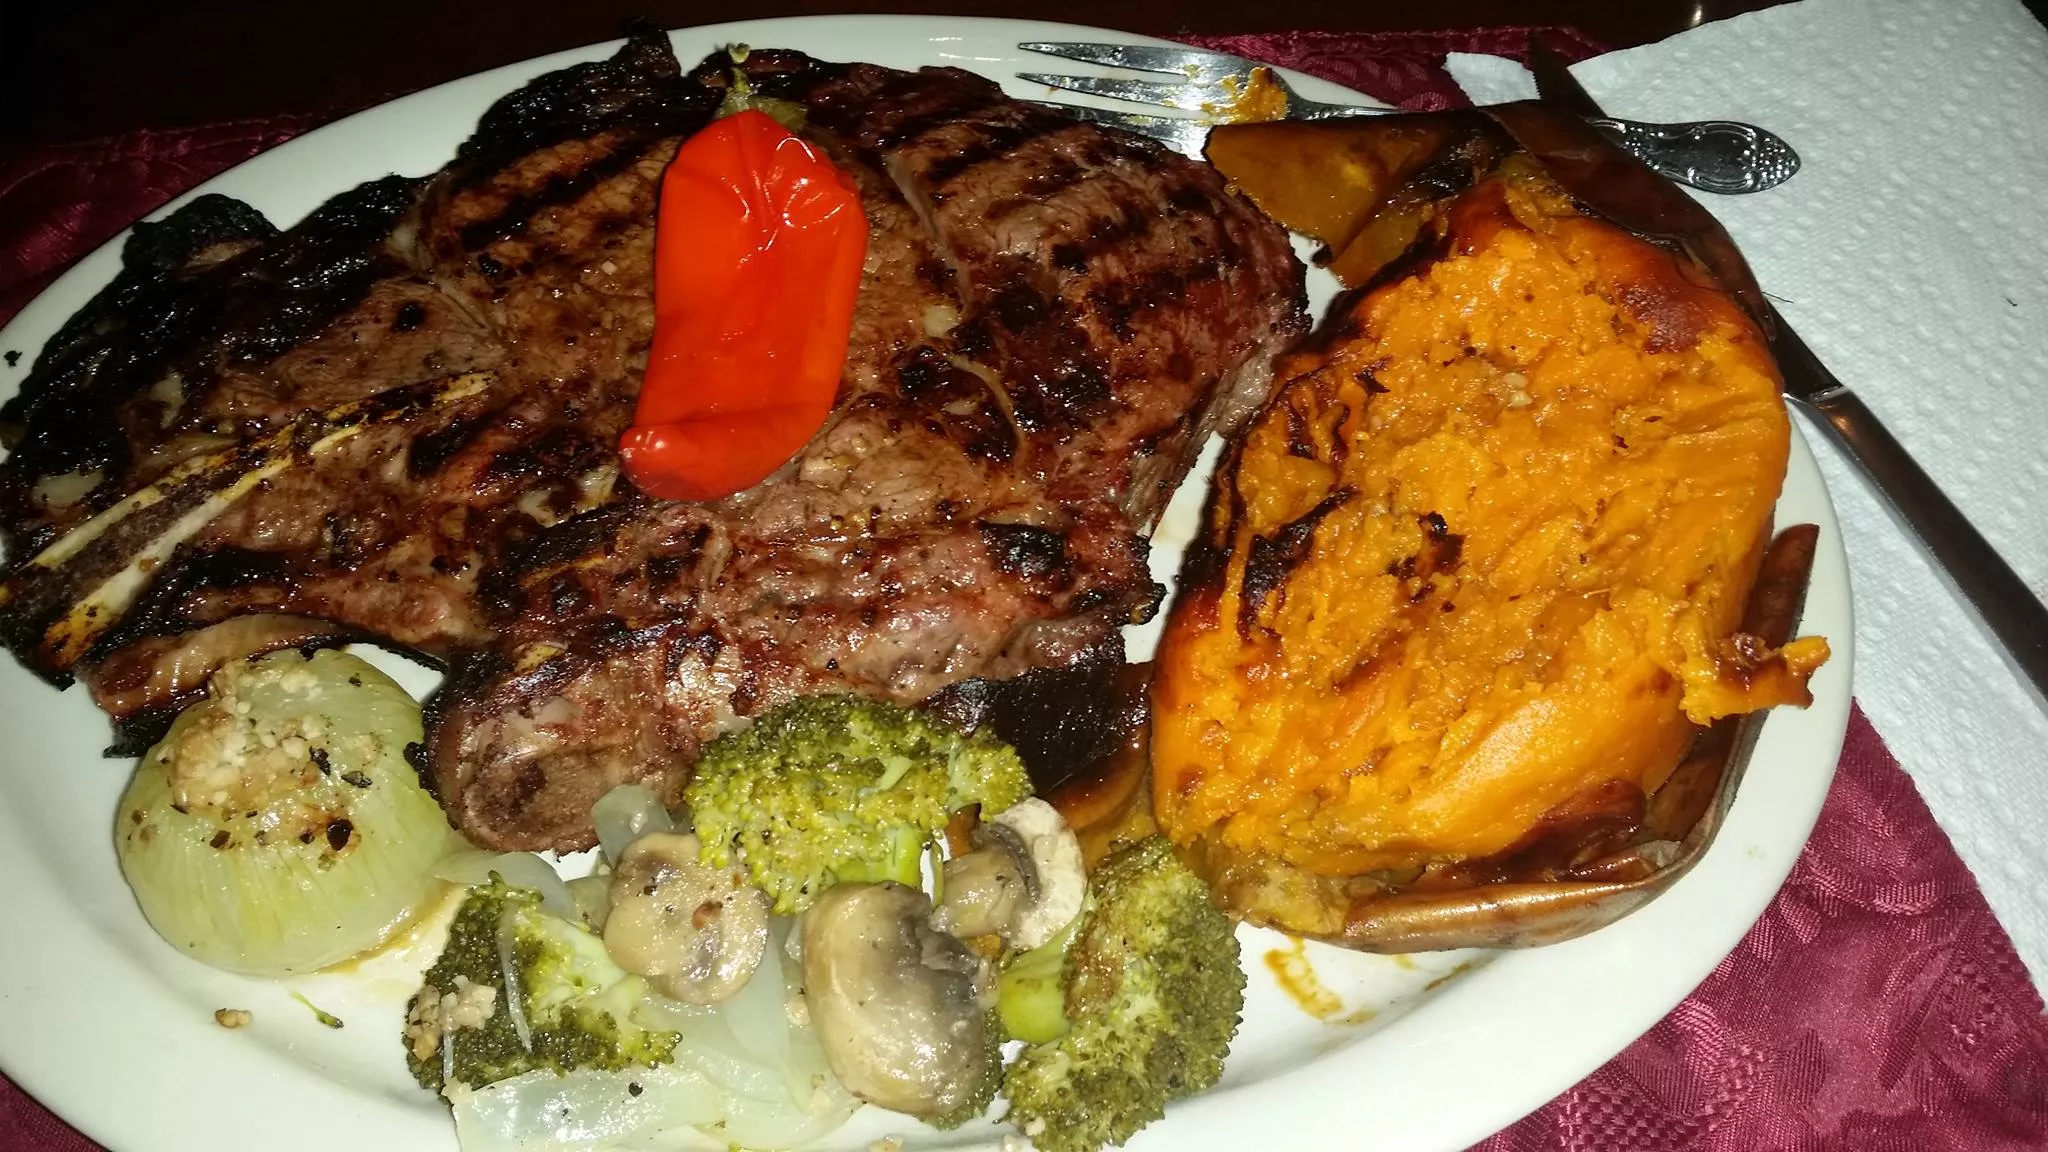 Steak, Broccoli, and Sweat Potato Dinner